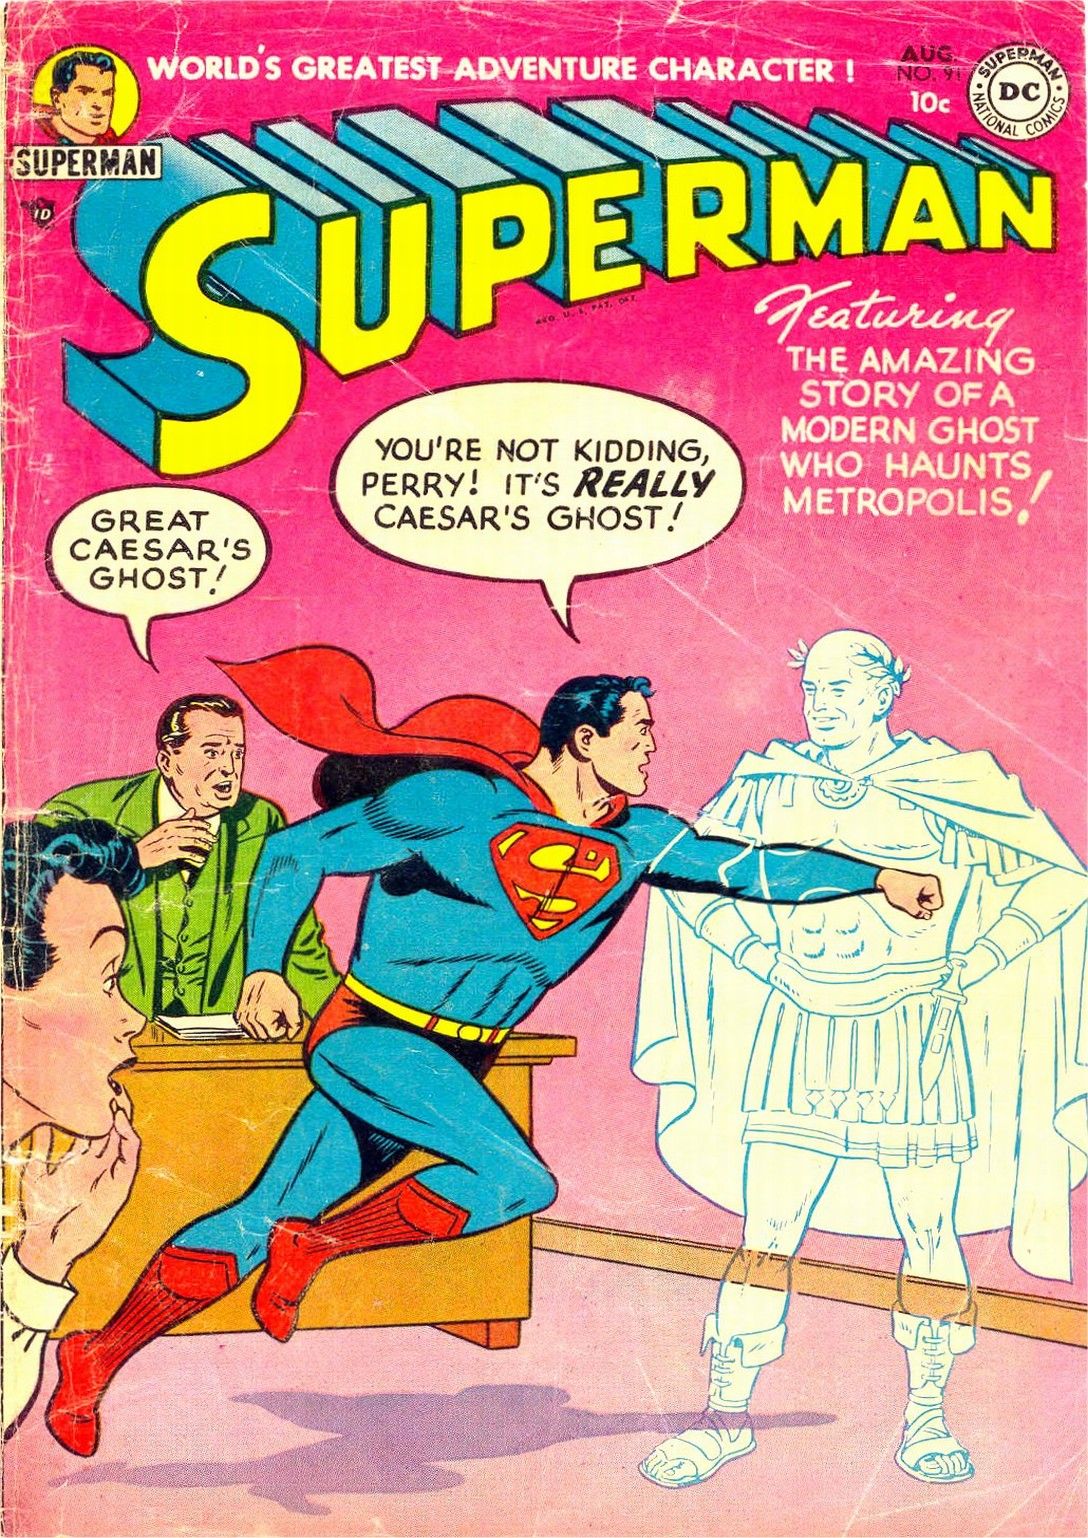 Superman fights Caesar's Ghost